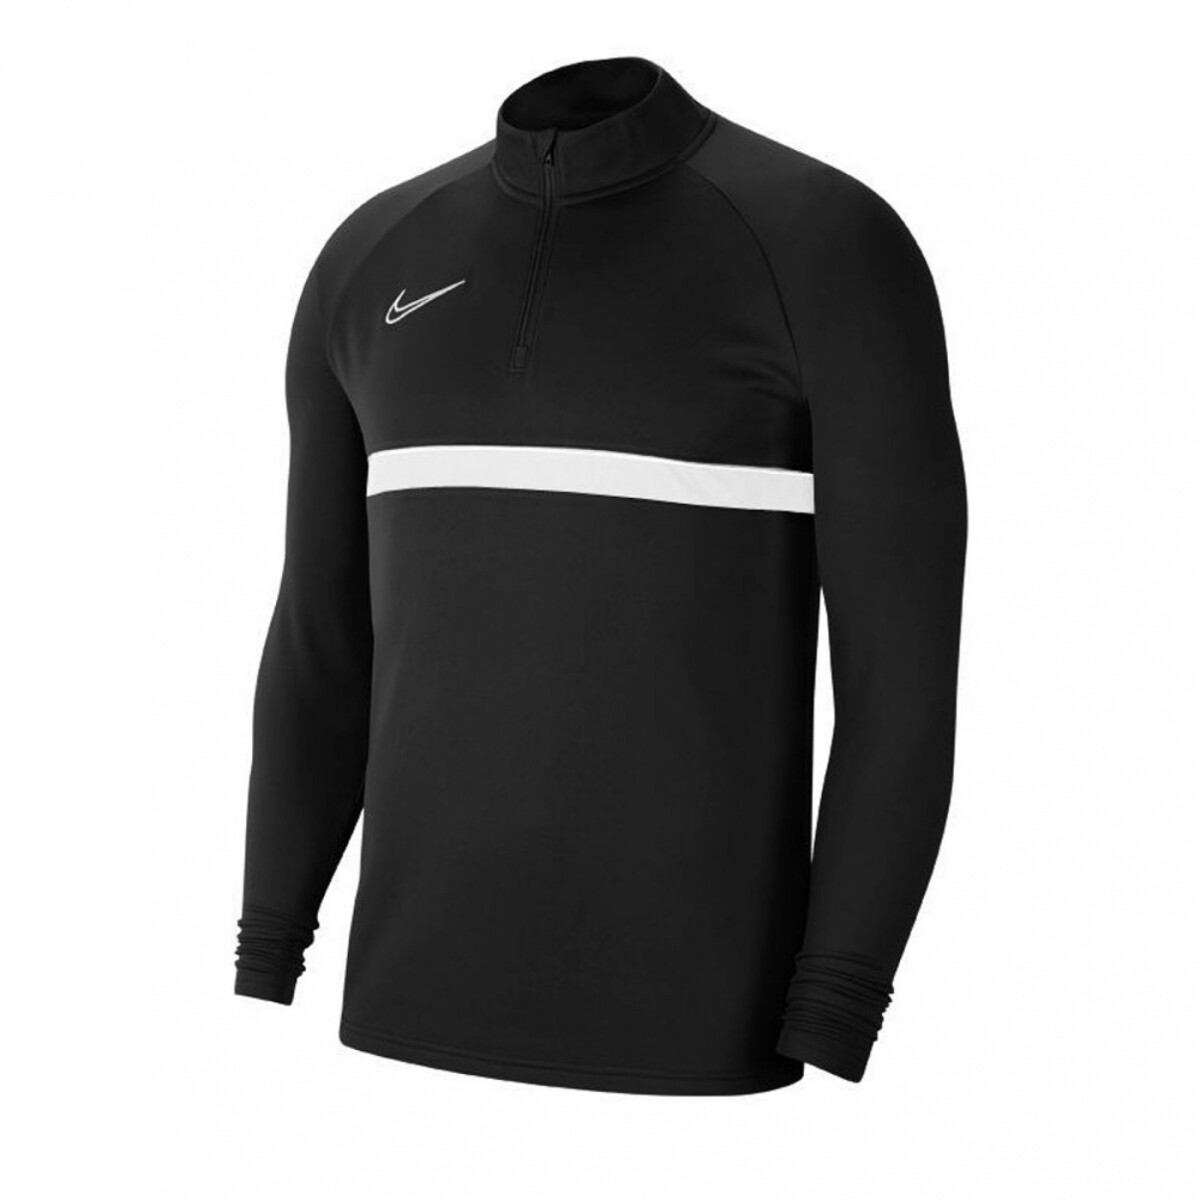 Buzo Nike Futbol Hombre Acd21 Dril Top Black/White - S/C 